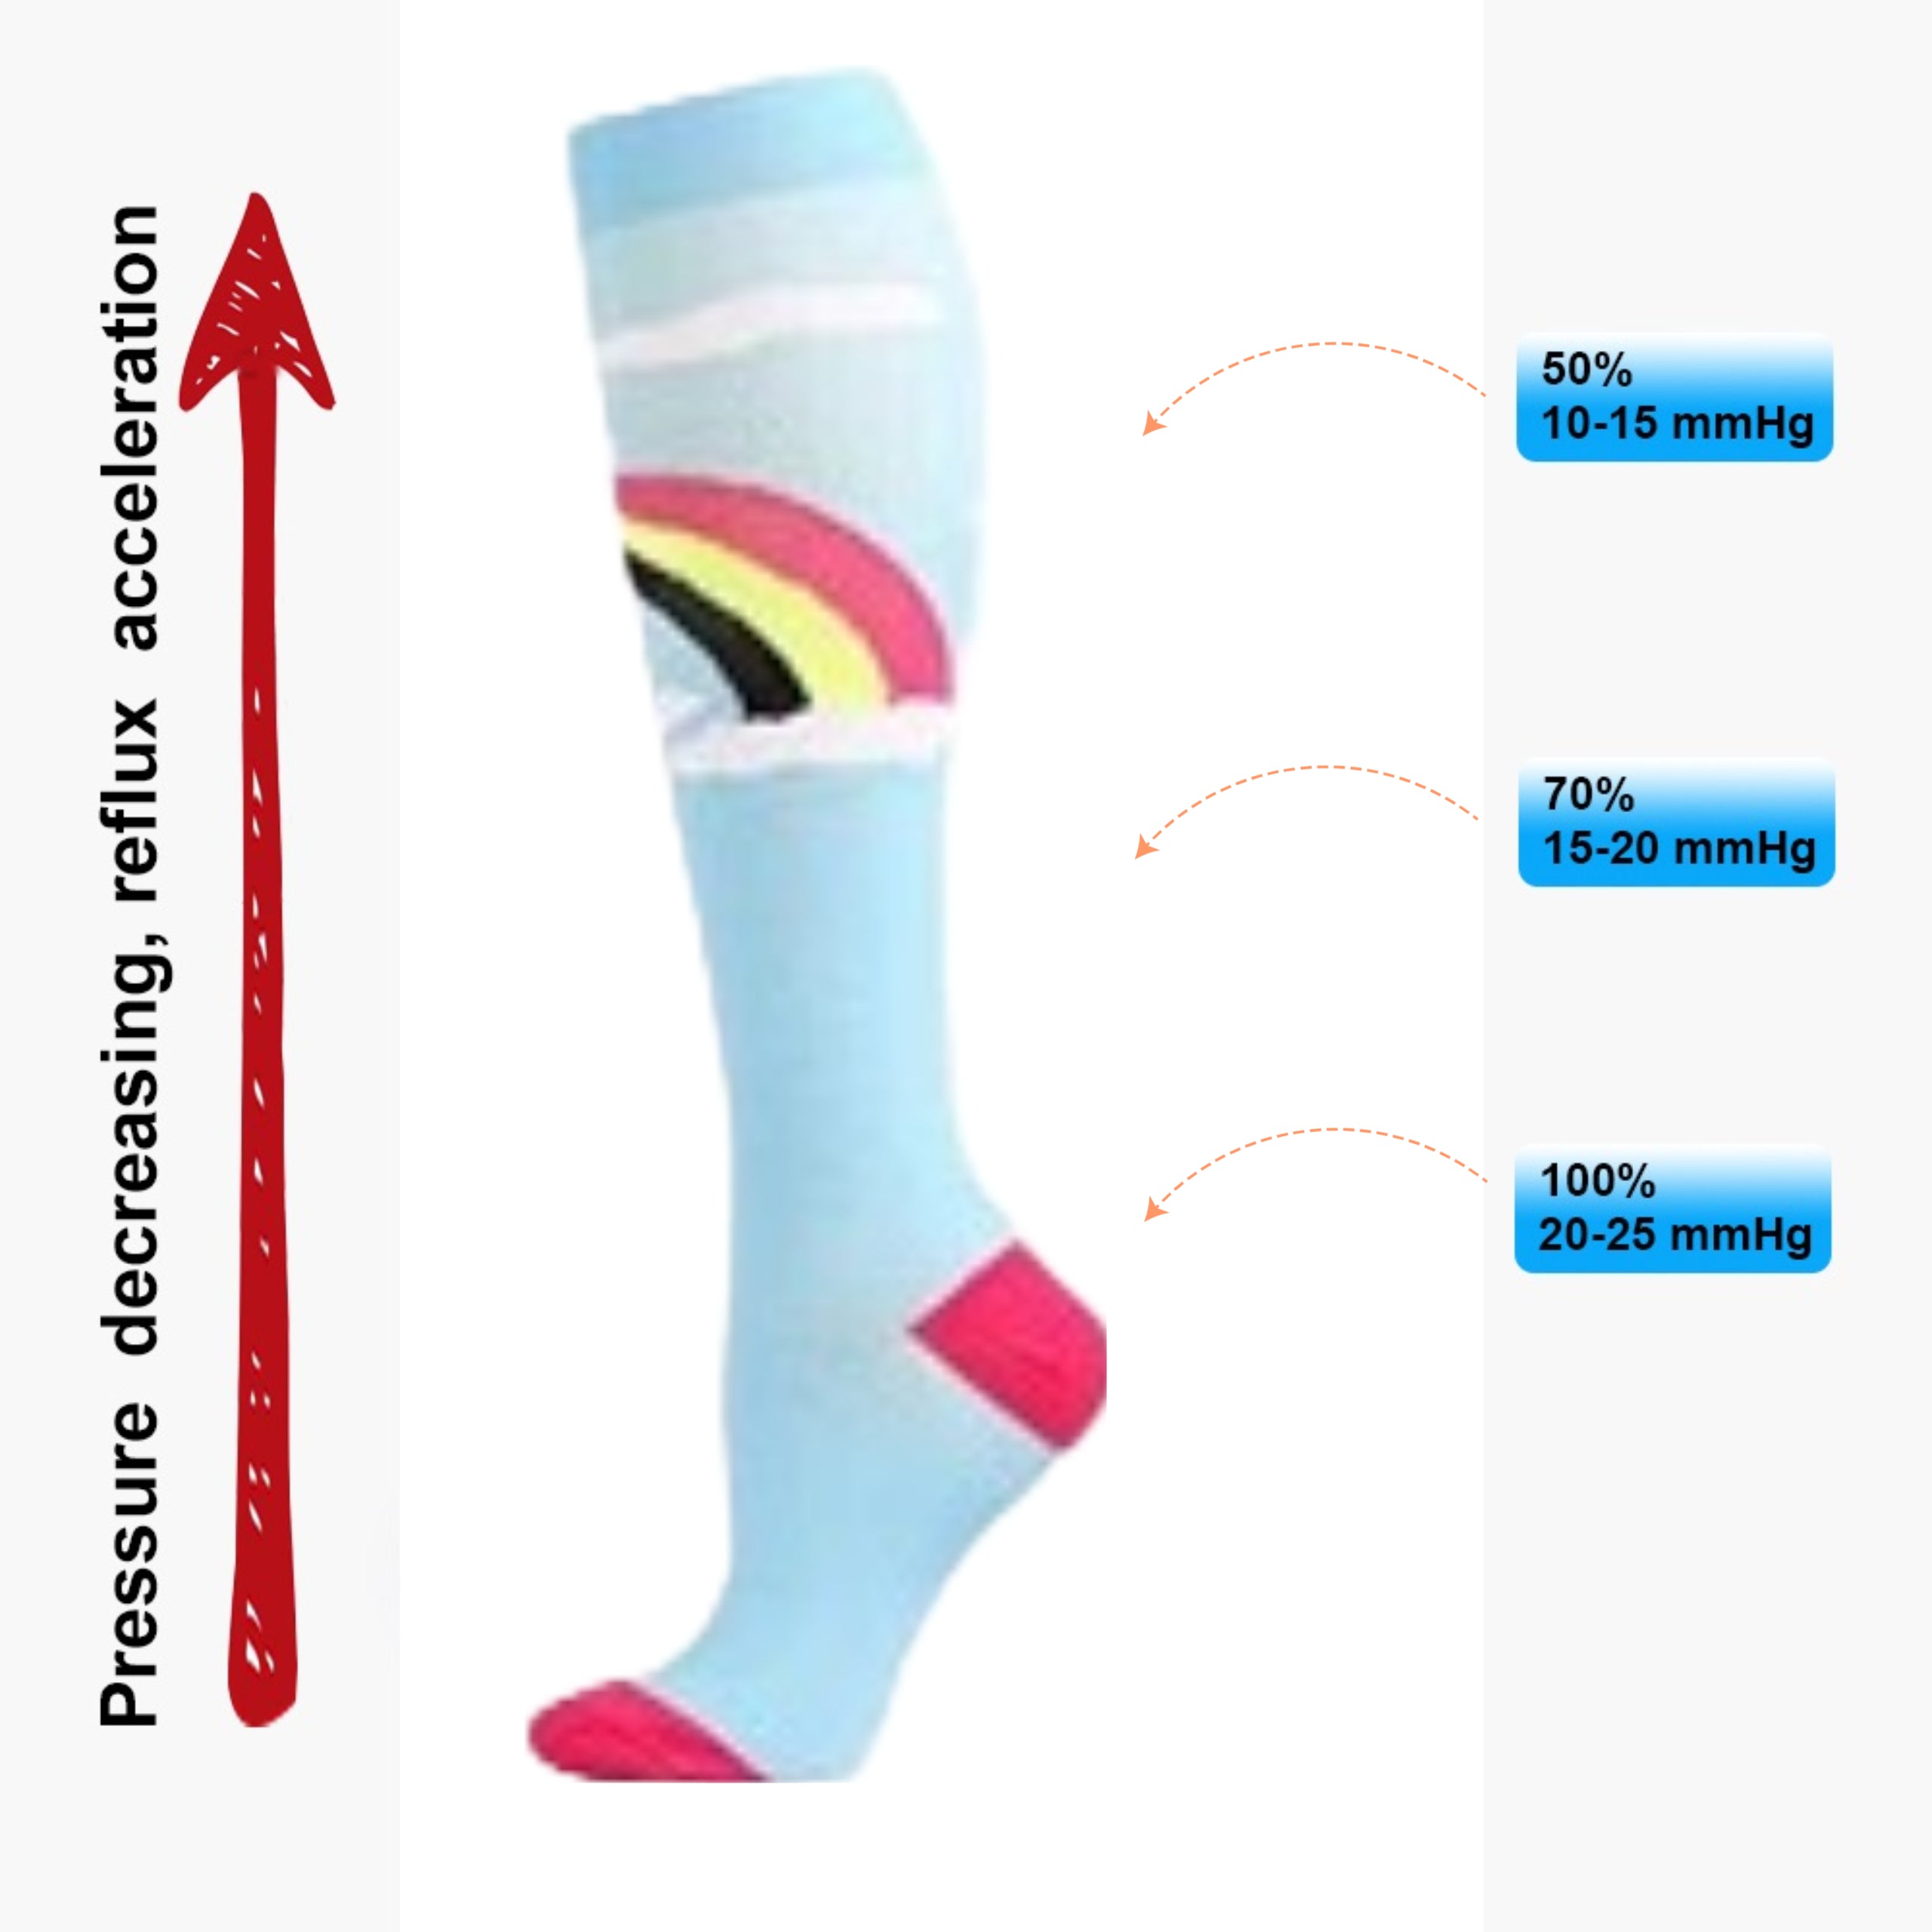 Rainbow Cloud Knee High (Compression Socks)